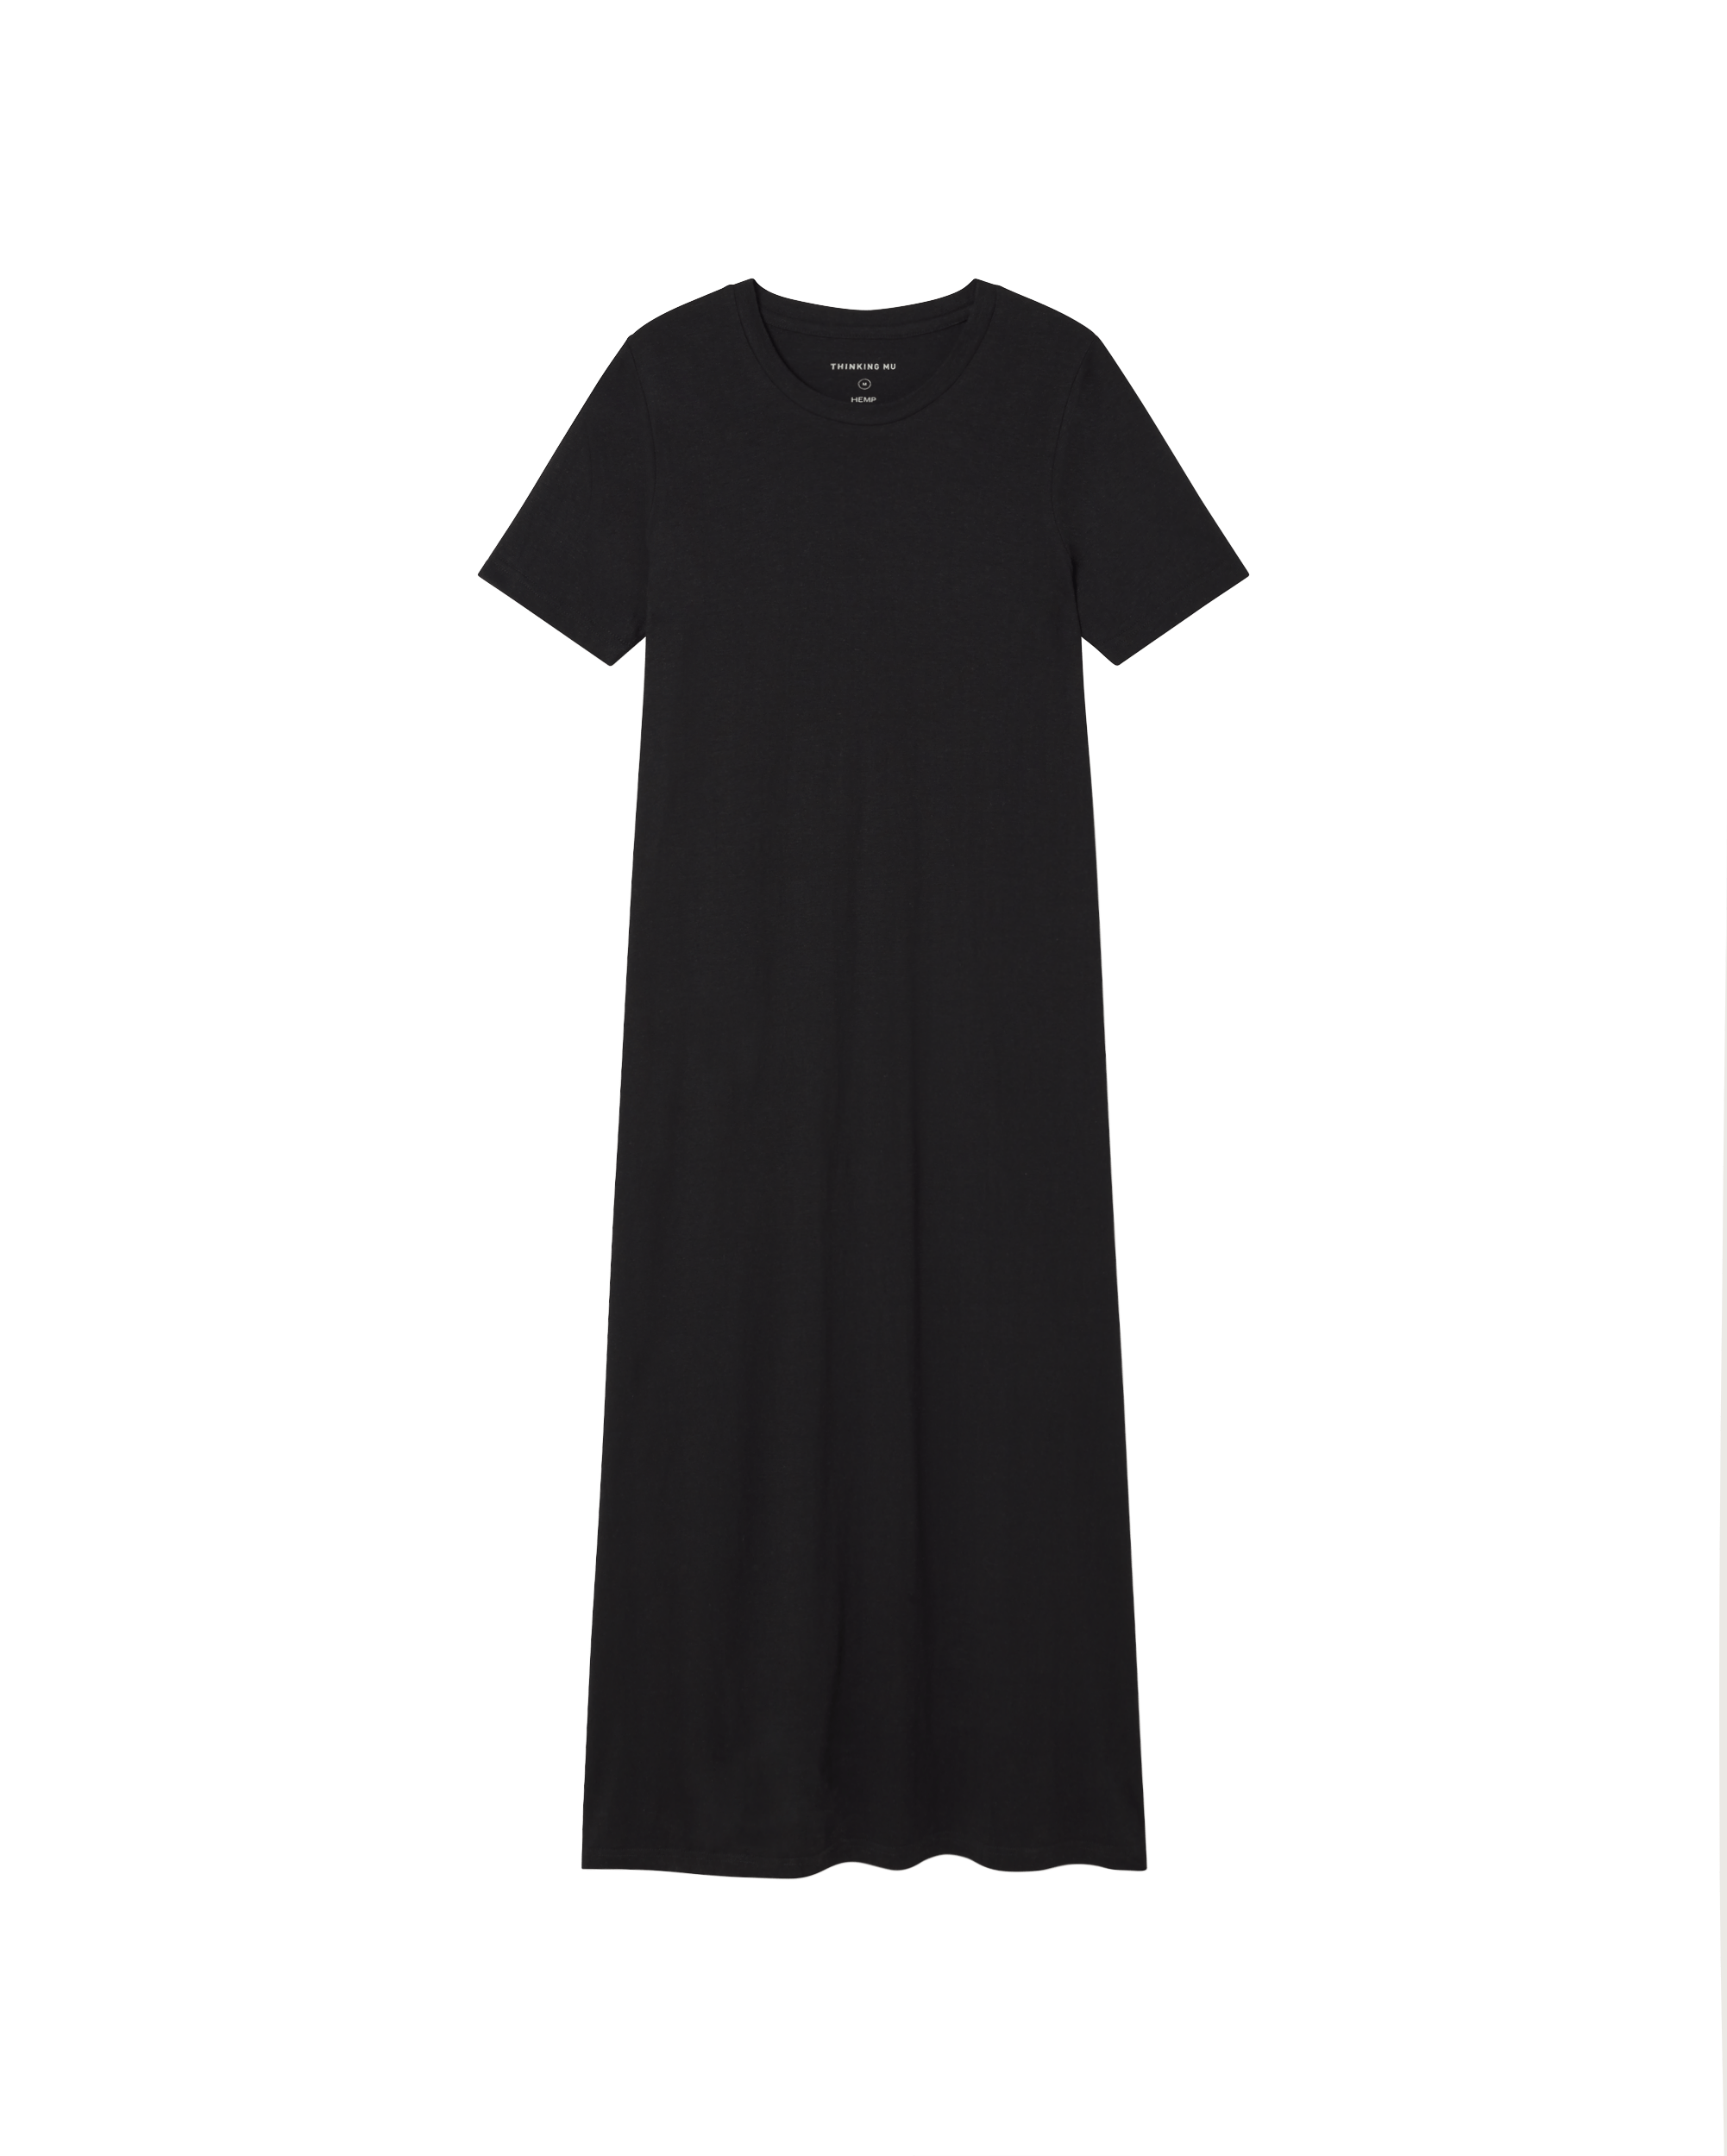 Thinking Mu Women's Black Hemp Oueme Dress